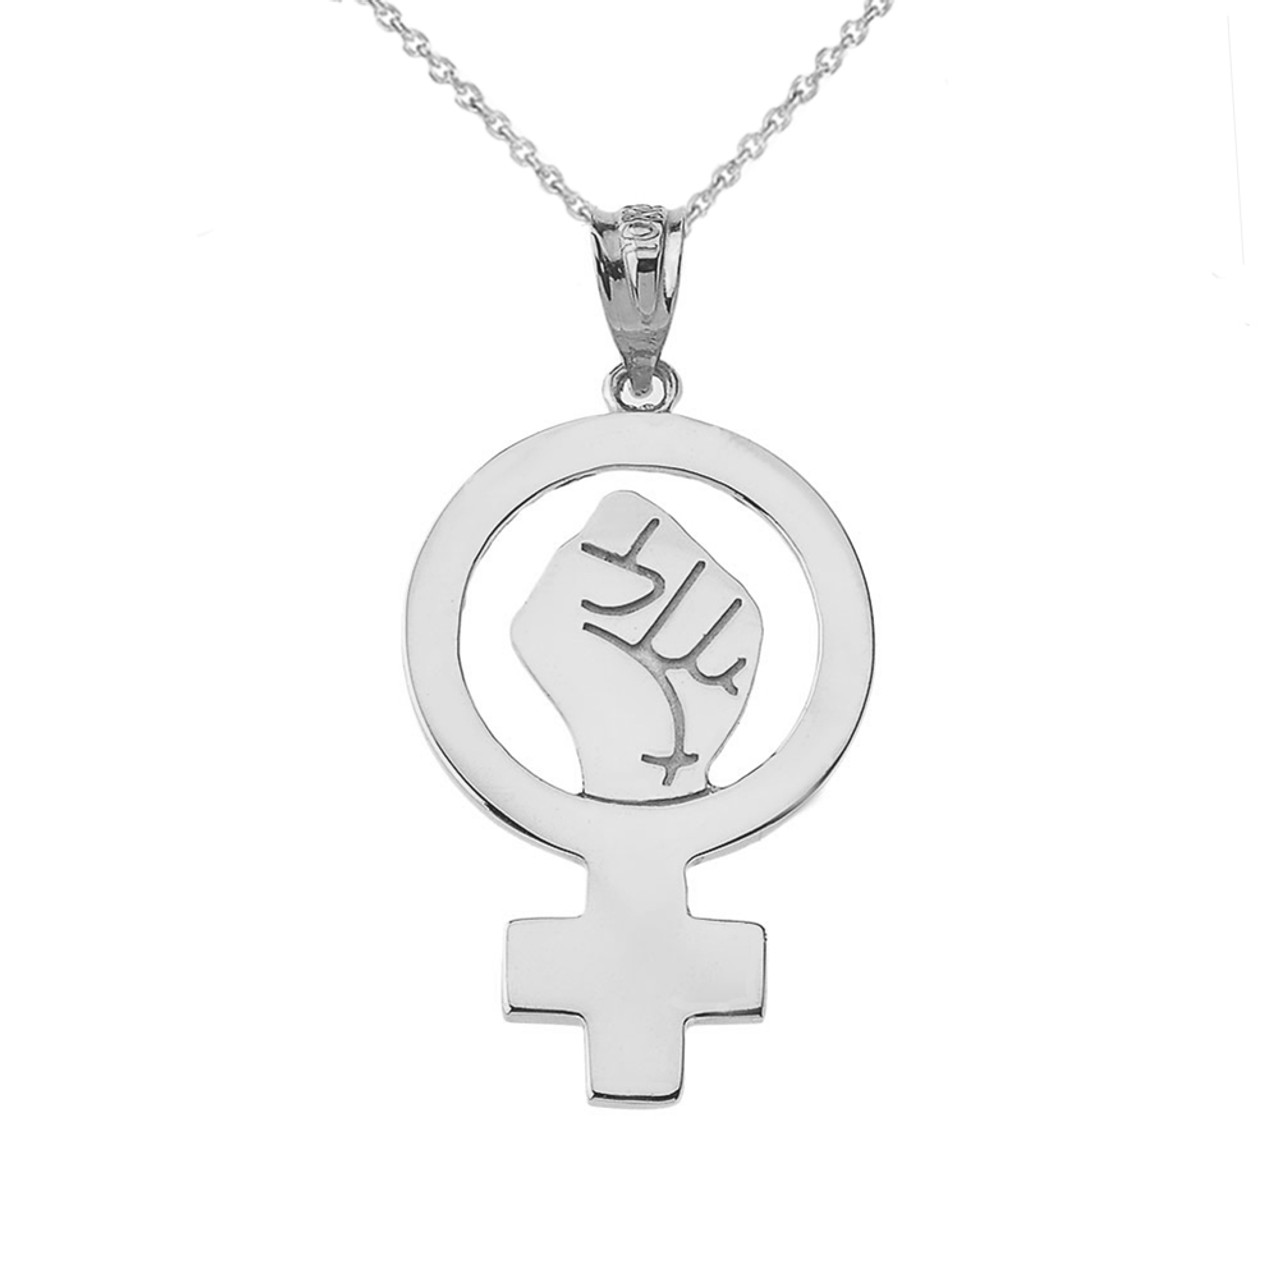 Girl Power Jewelry | Girl Power Collection | Capsul Jewelry